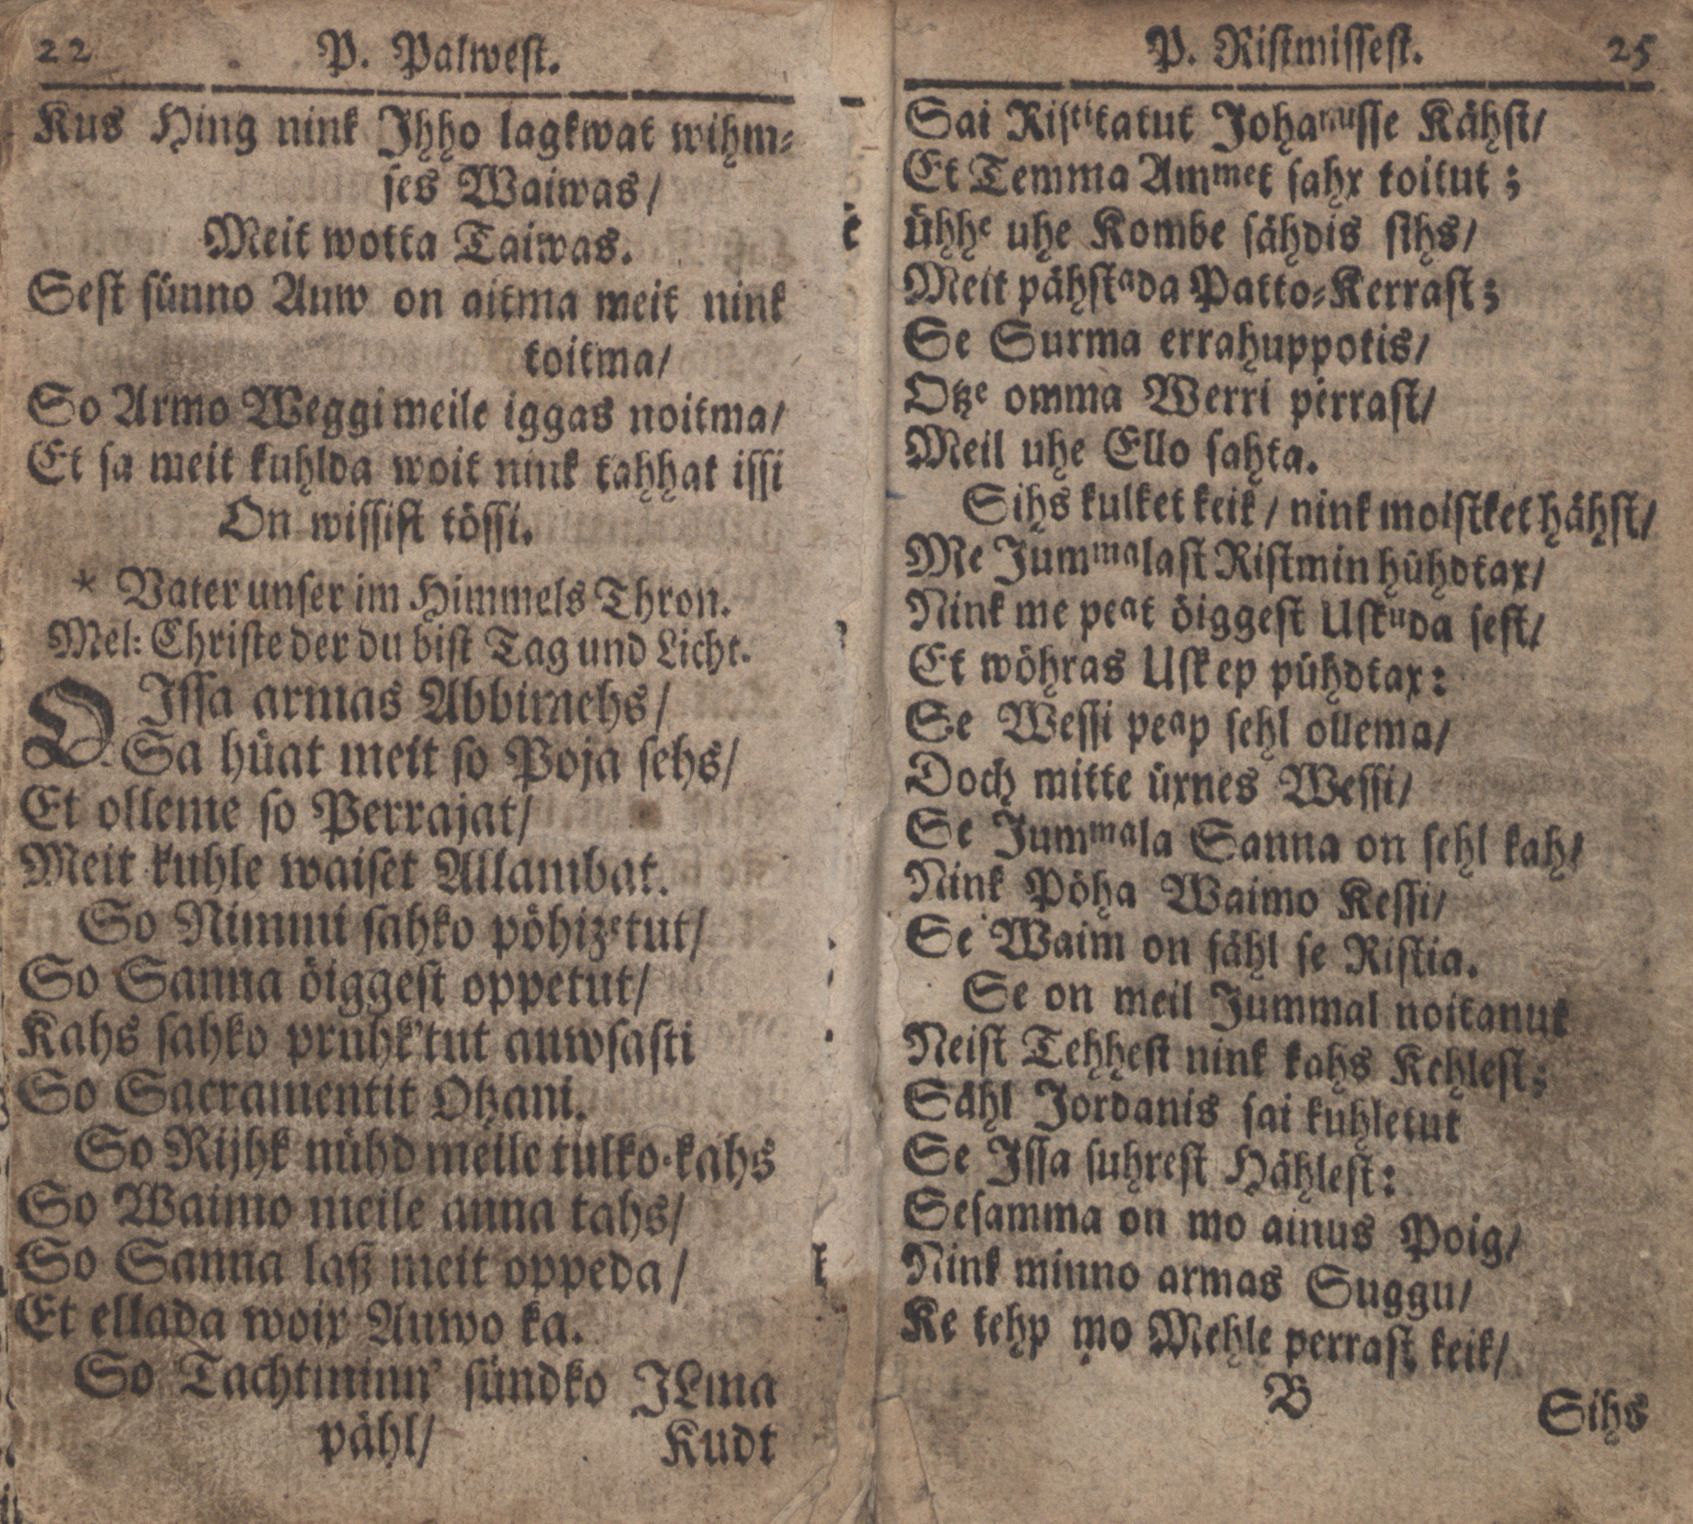 Ma-Kele Laulo-Ramat (1702) | 11. (22-25) Main body of text